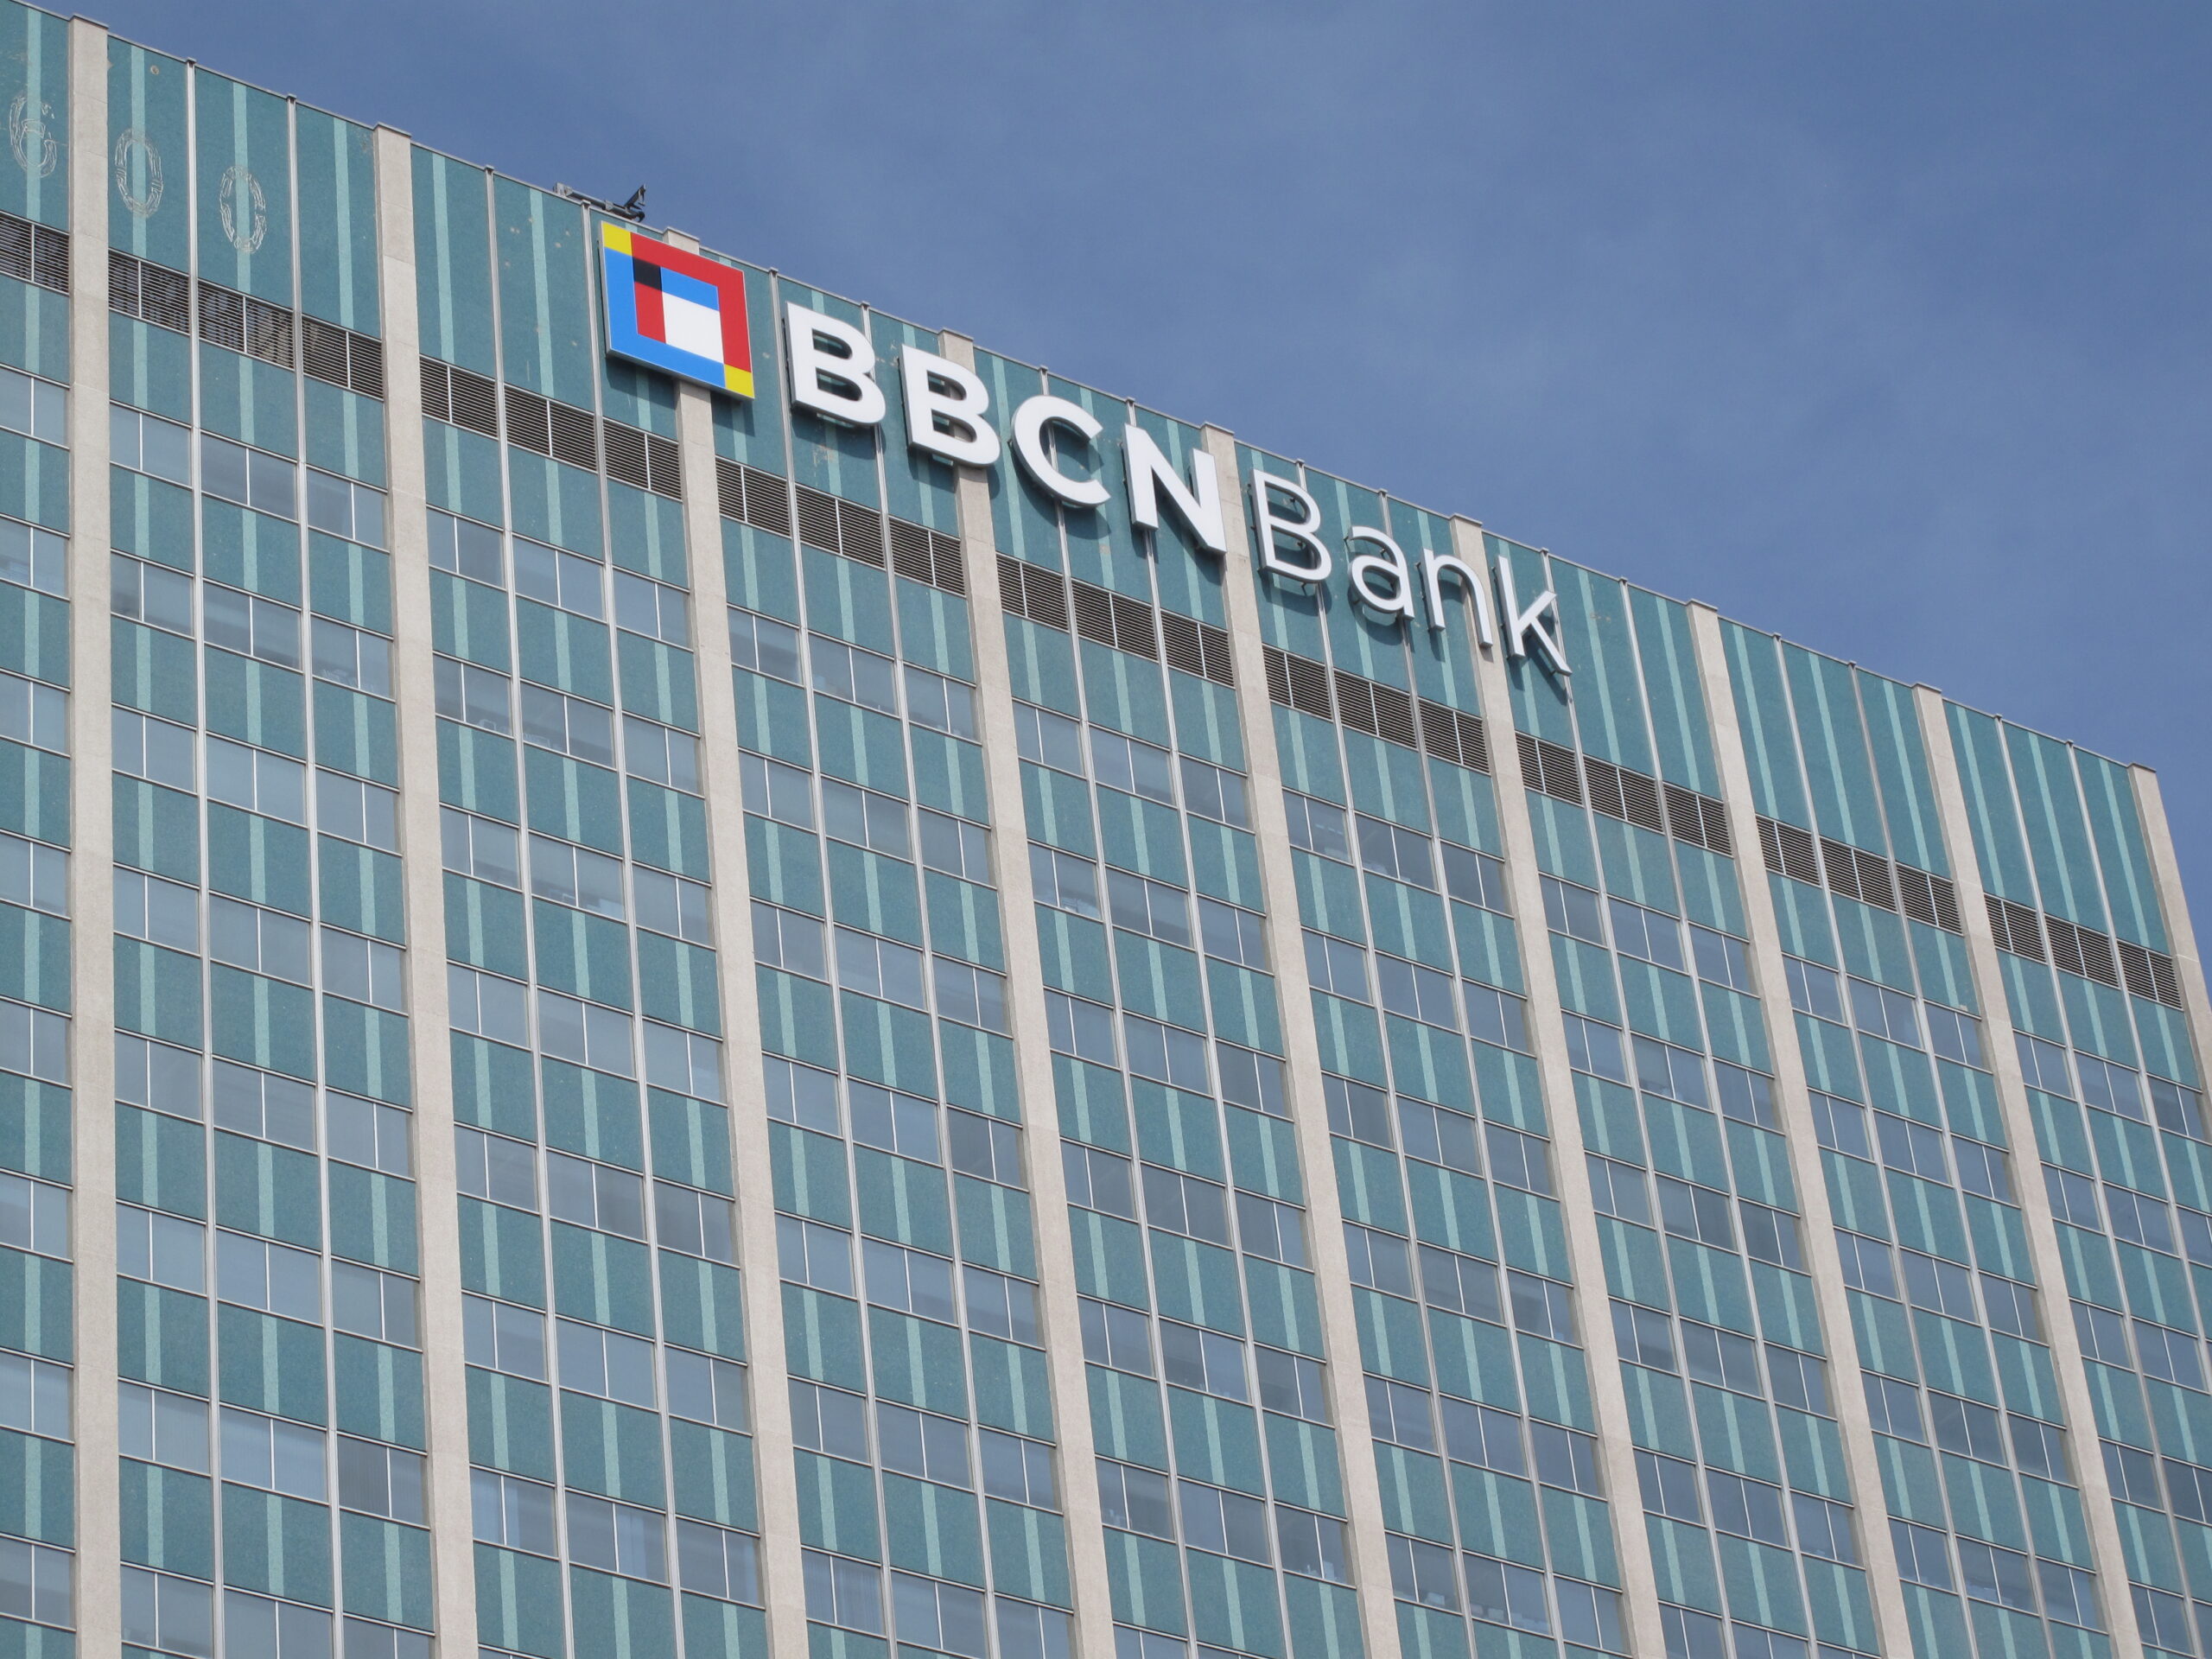 BBCN Bank